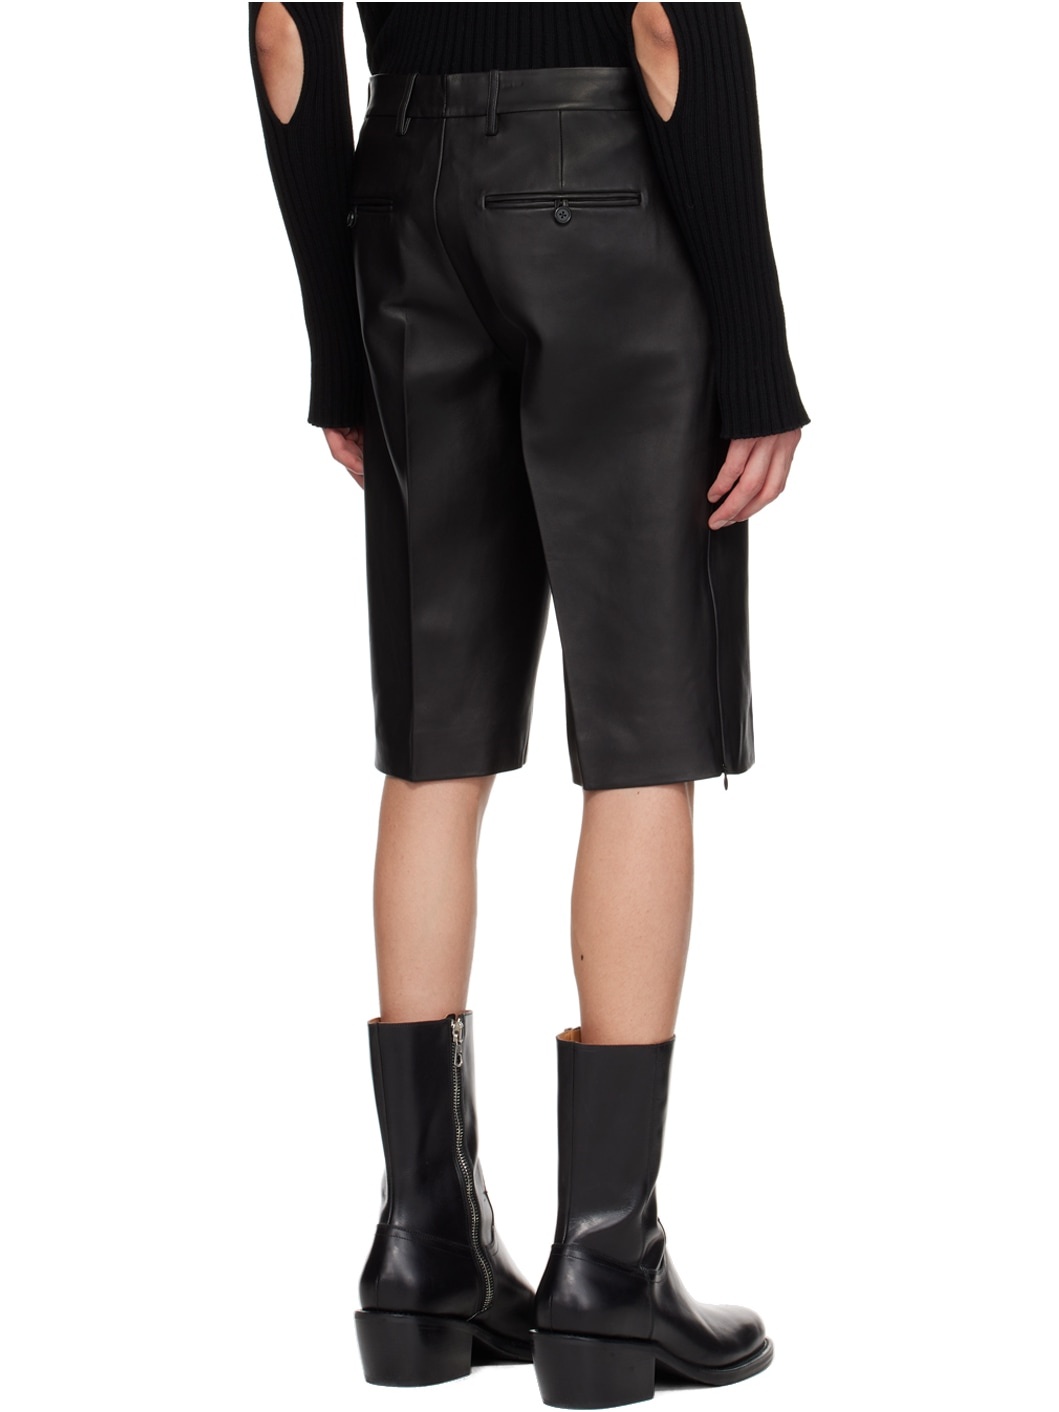 Black Creased Leather Shorts - 3